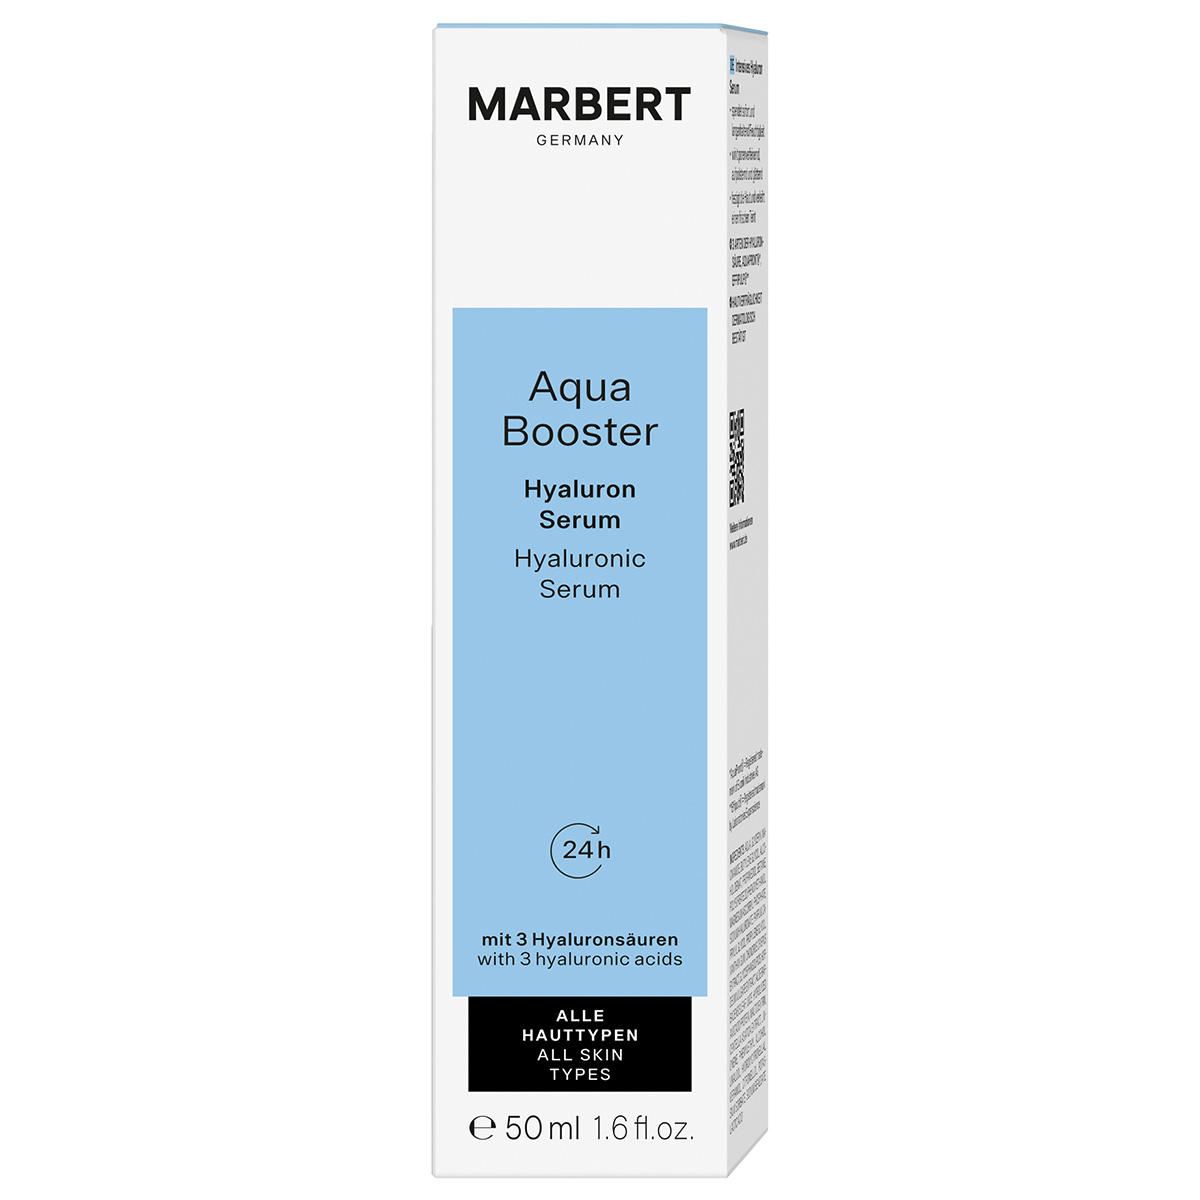 Marbert Aqua Booster Hyaluron Serum 50 ml - 3